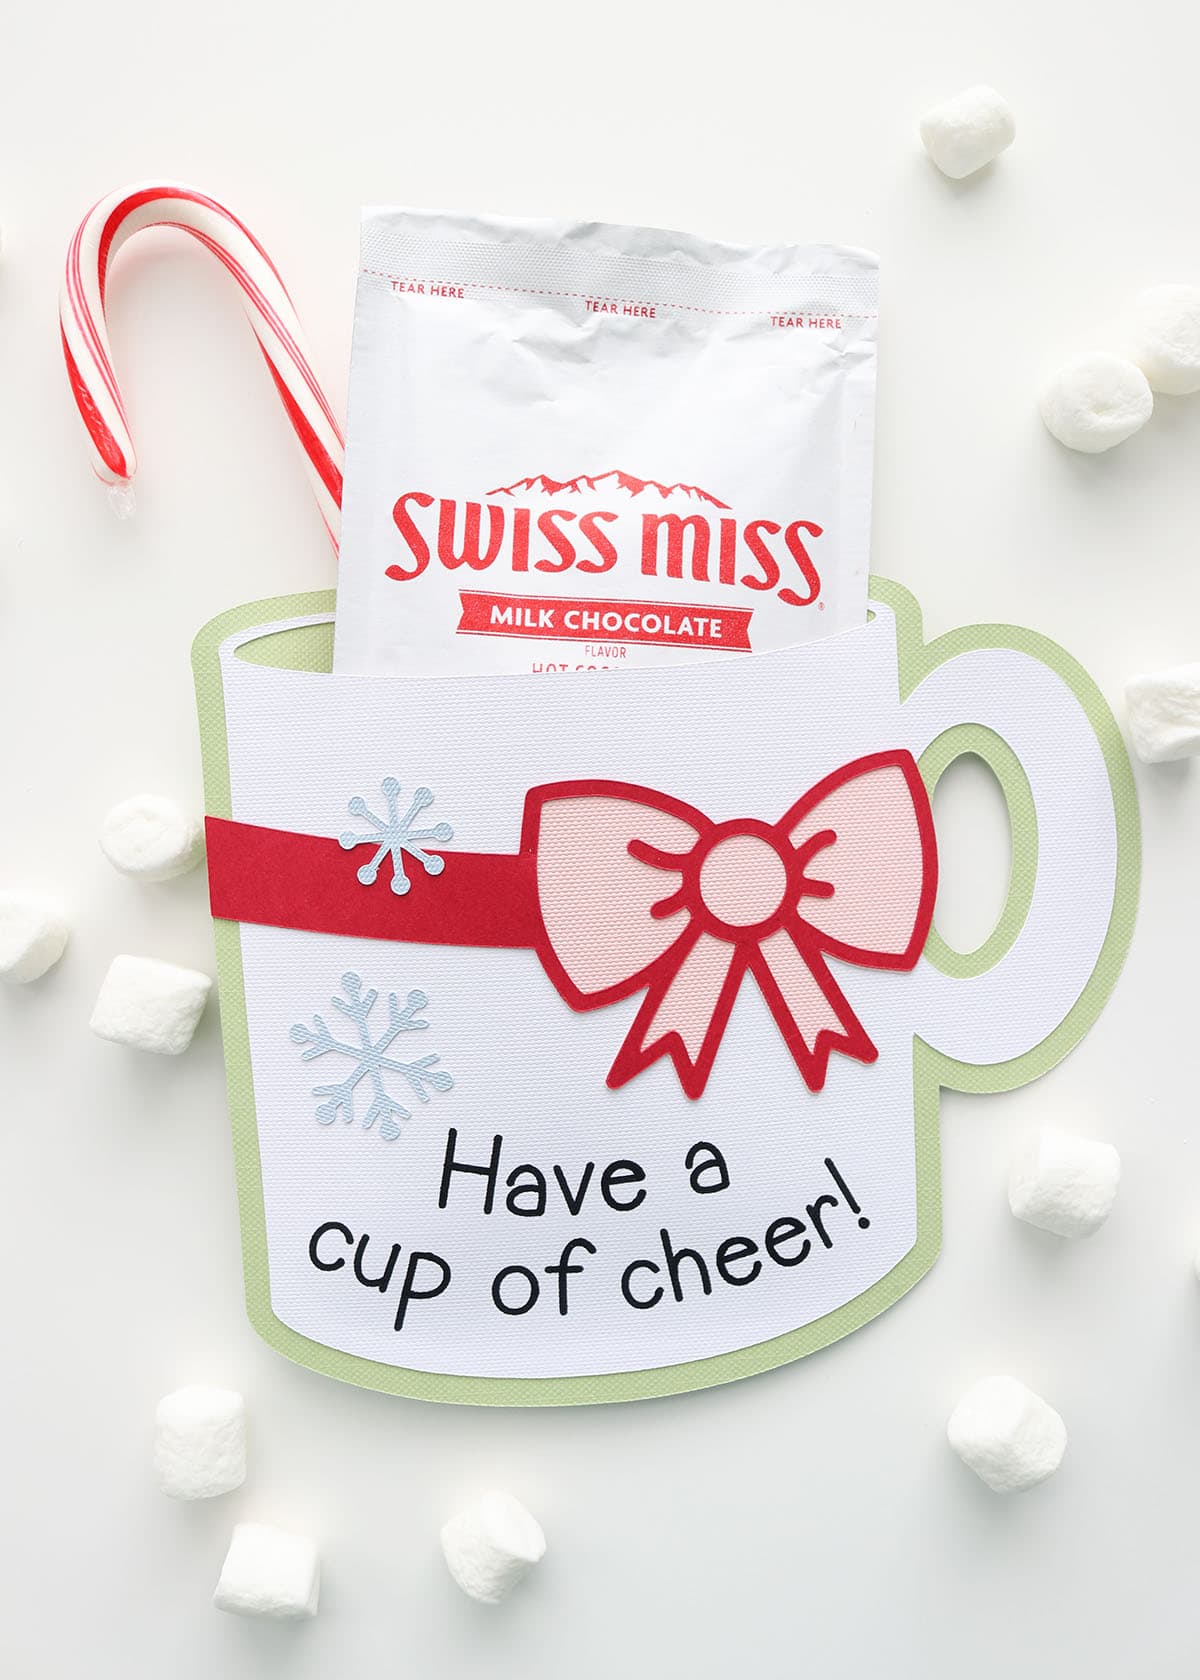 DIY cup of cheer hot chocolate gift idea